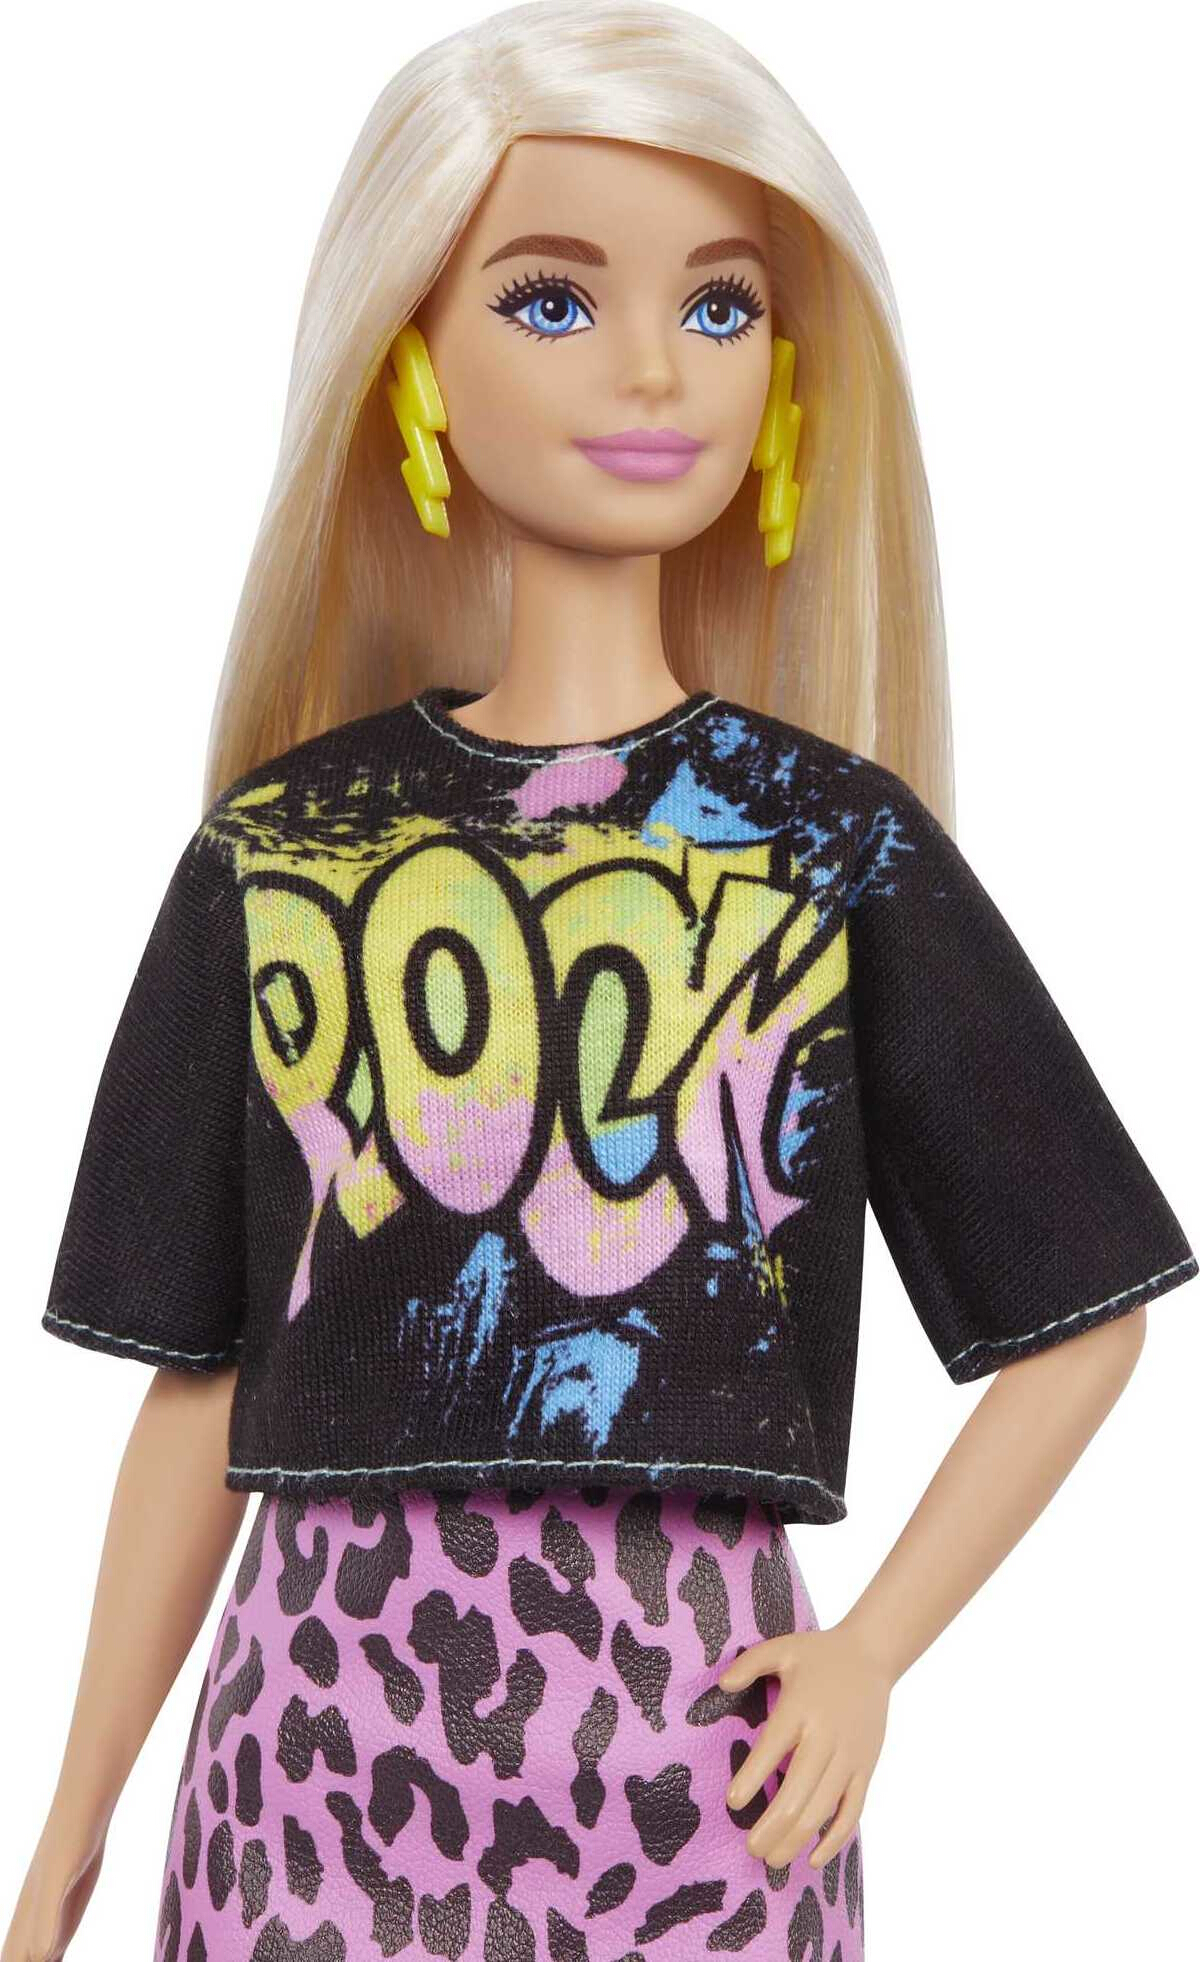 Barbie Fashionistas Dolls - image 4 of 7